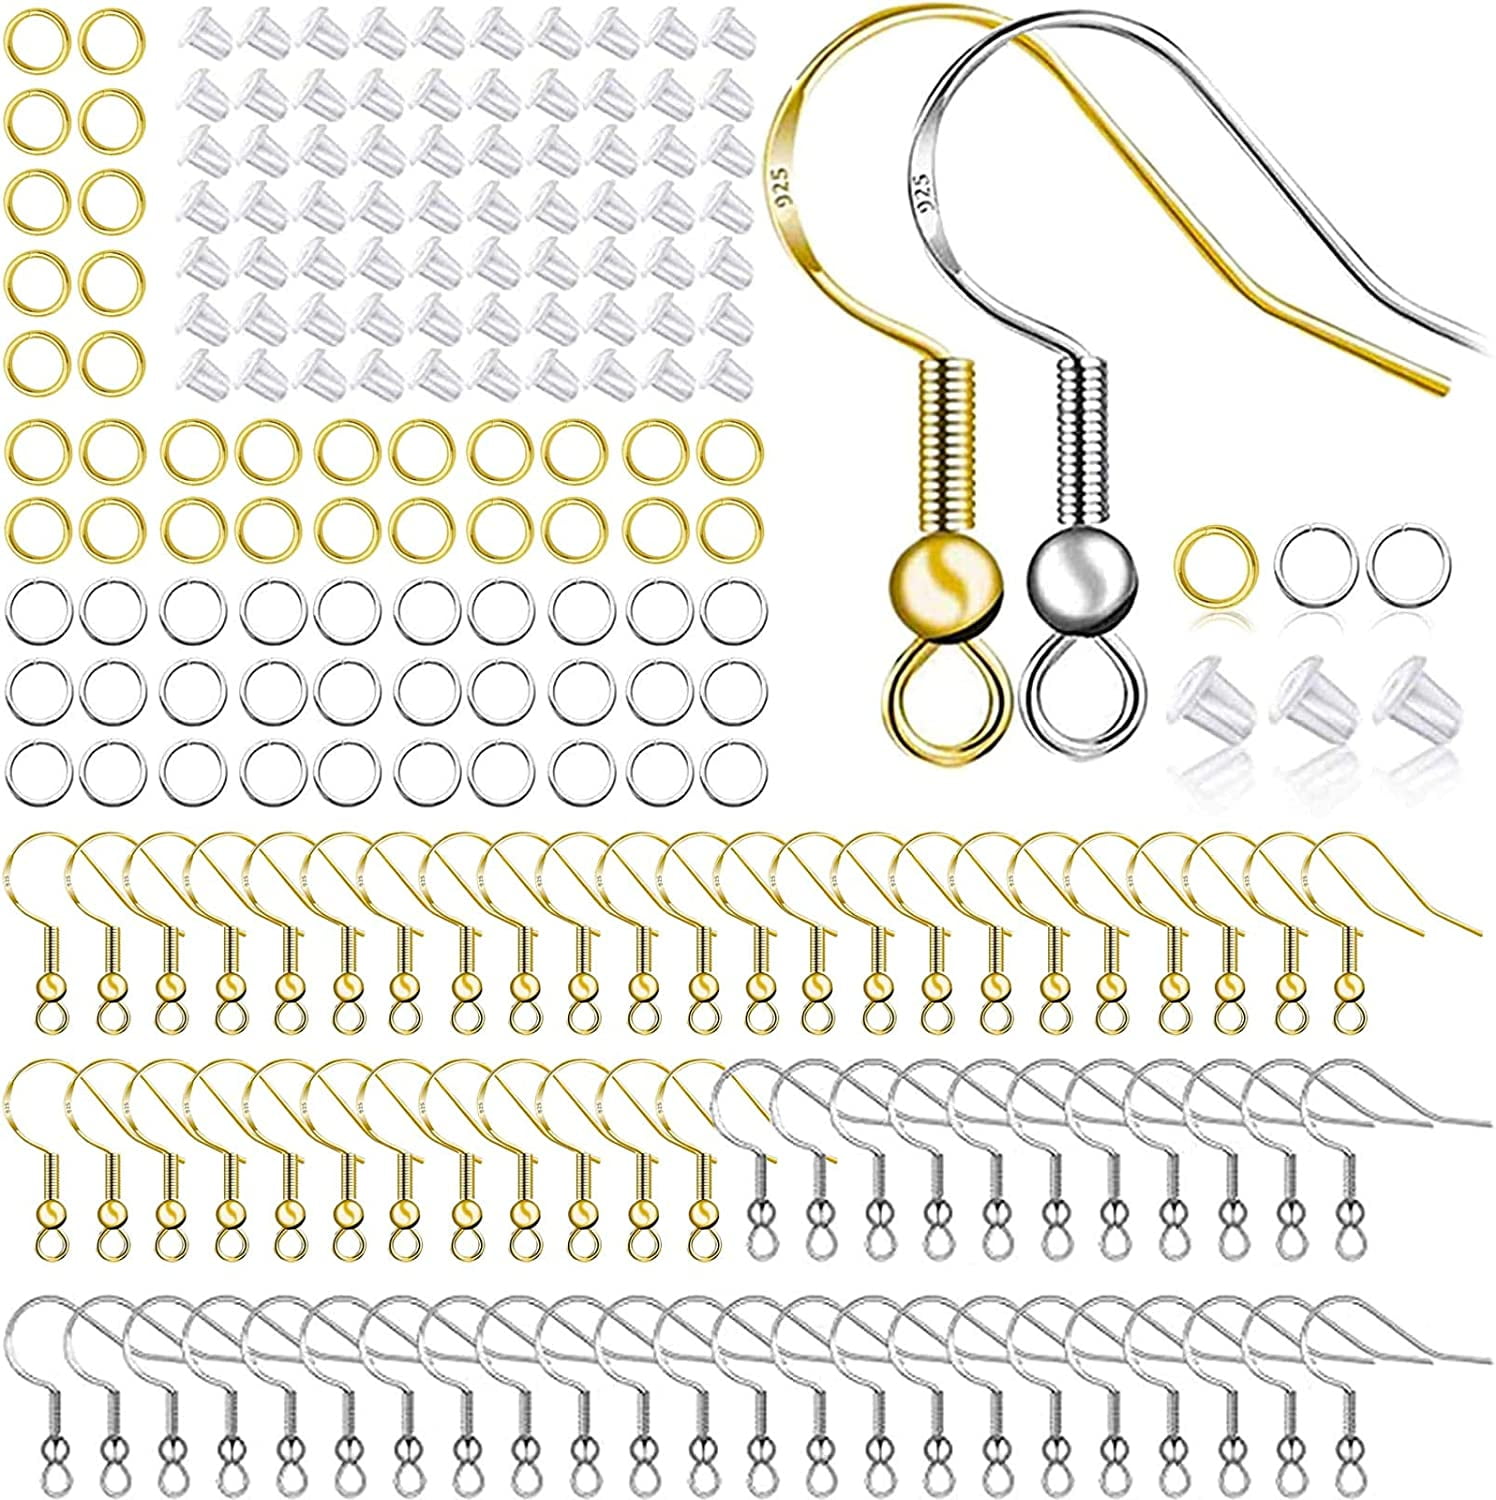 250pcs S925 Silver Earring Hooks Plated Silver Earring Accessories Screw  Eye Pin Loop Earring Diy Jewelry Making Tools